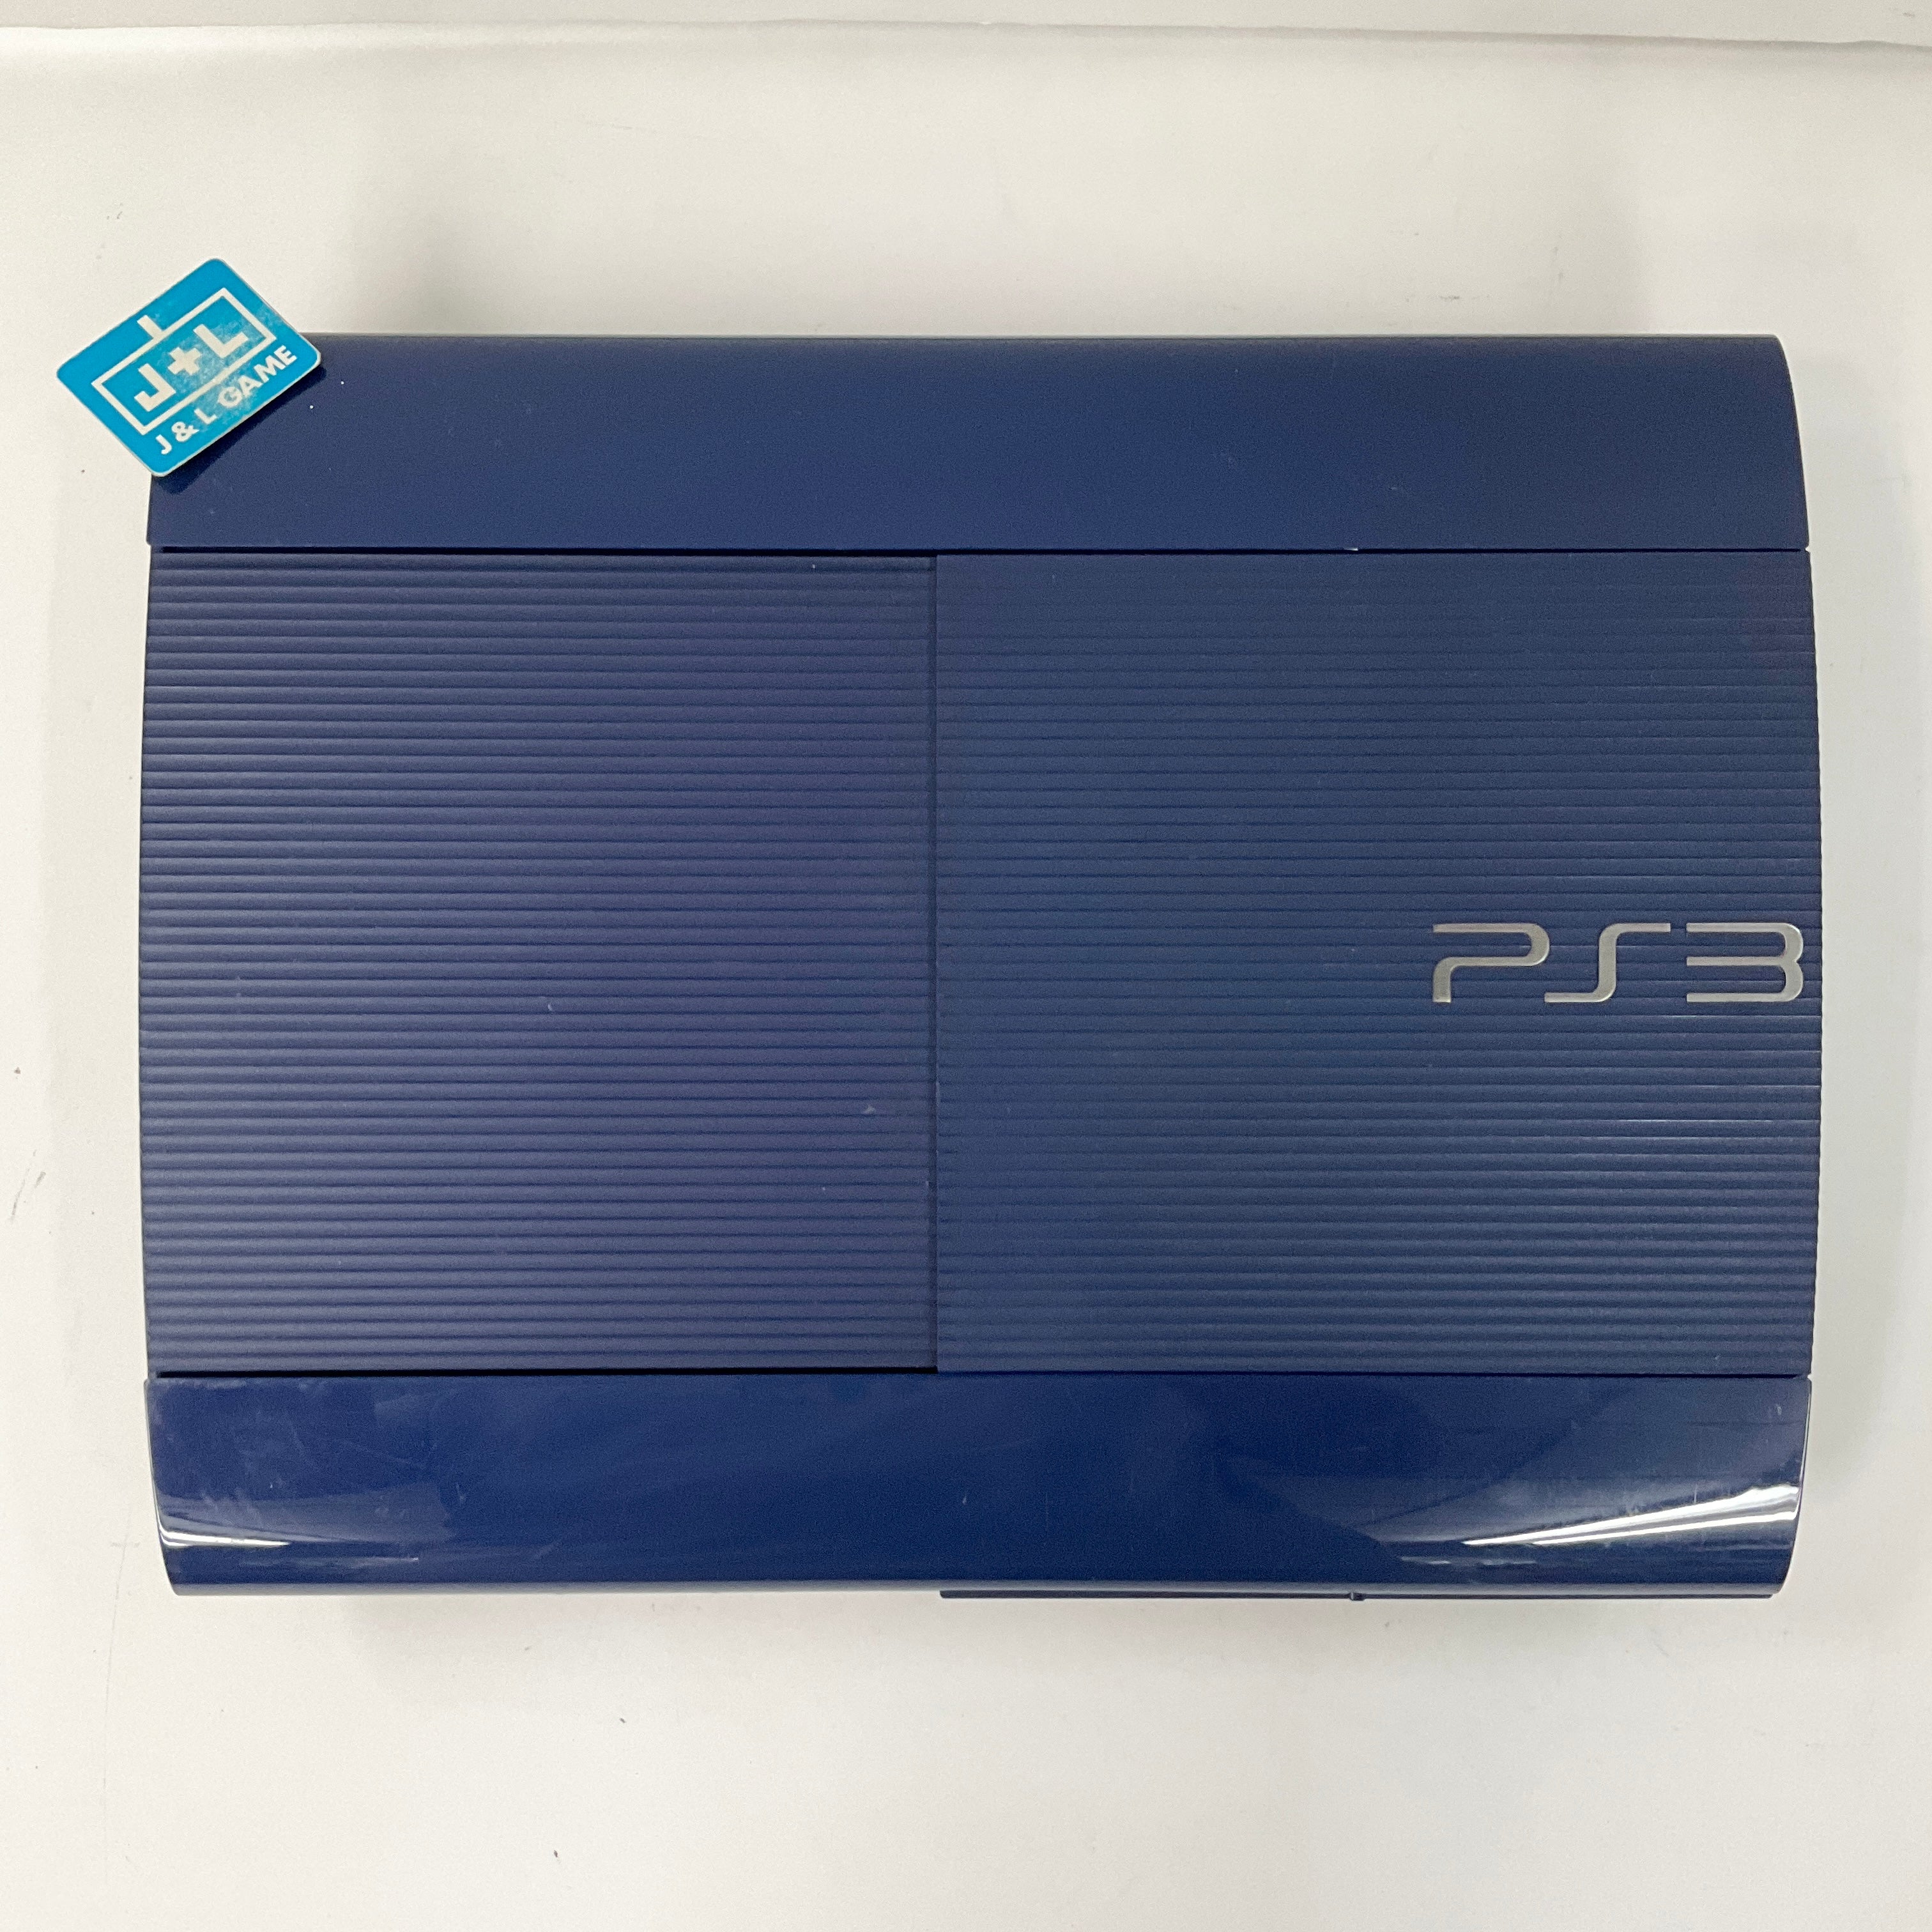 Sony PlayStation 3 Super Slim 250 GB Console (Azurite Blue) - (PS3 